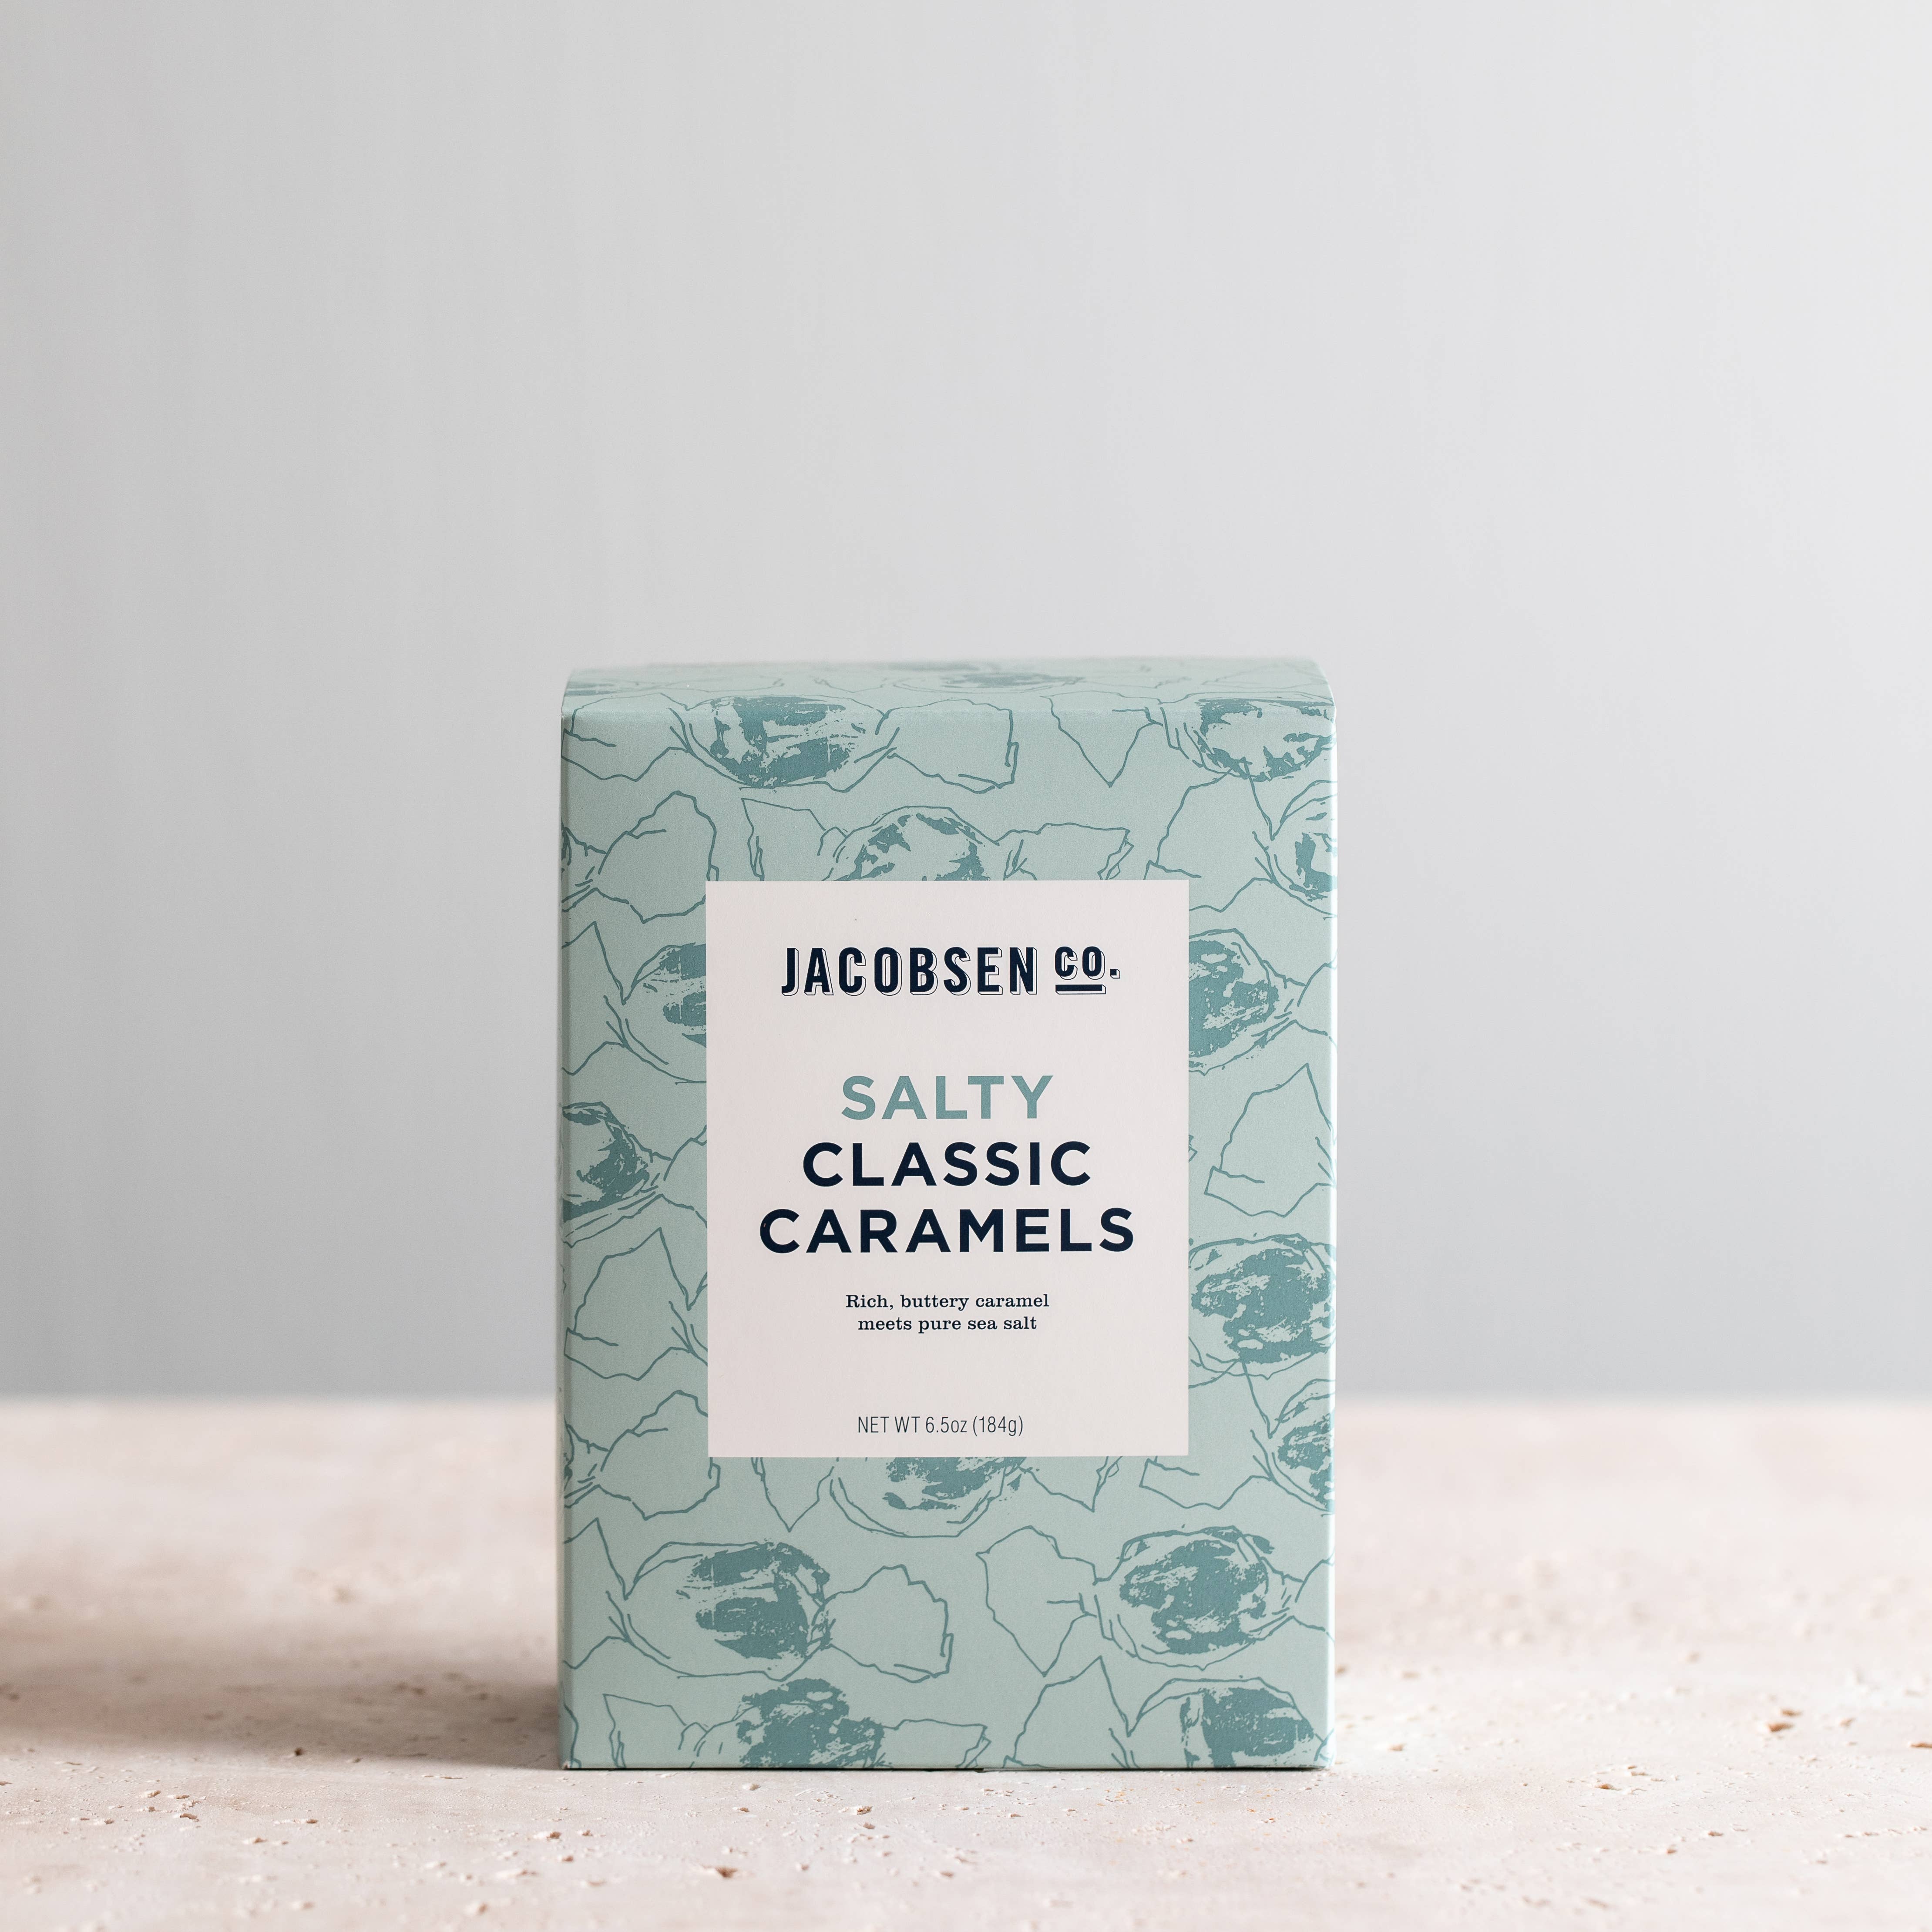 Jacobsen's Salty Classic Caramels